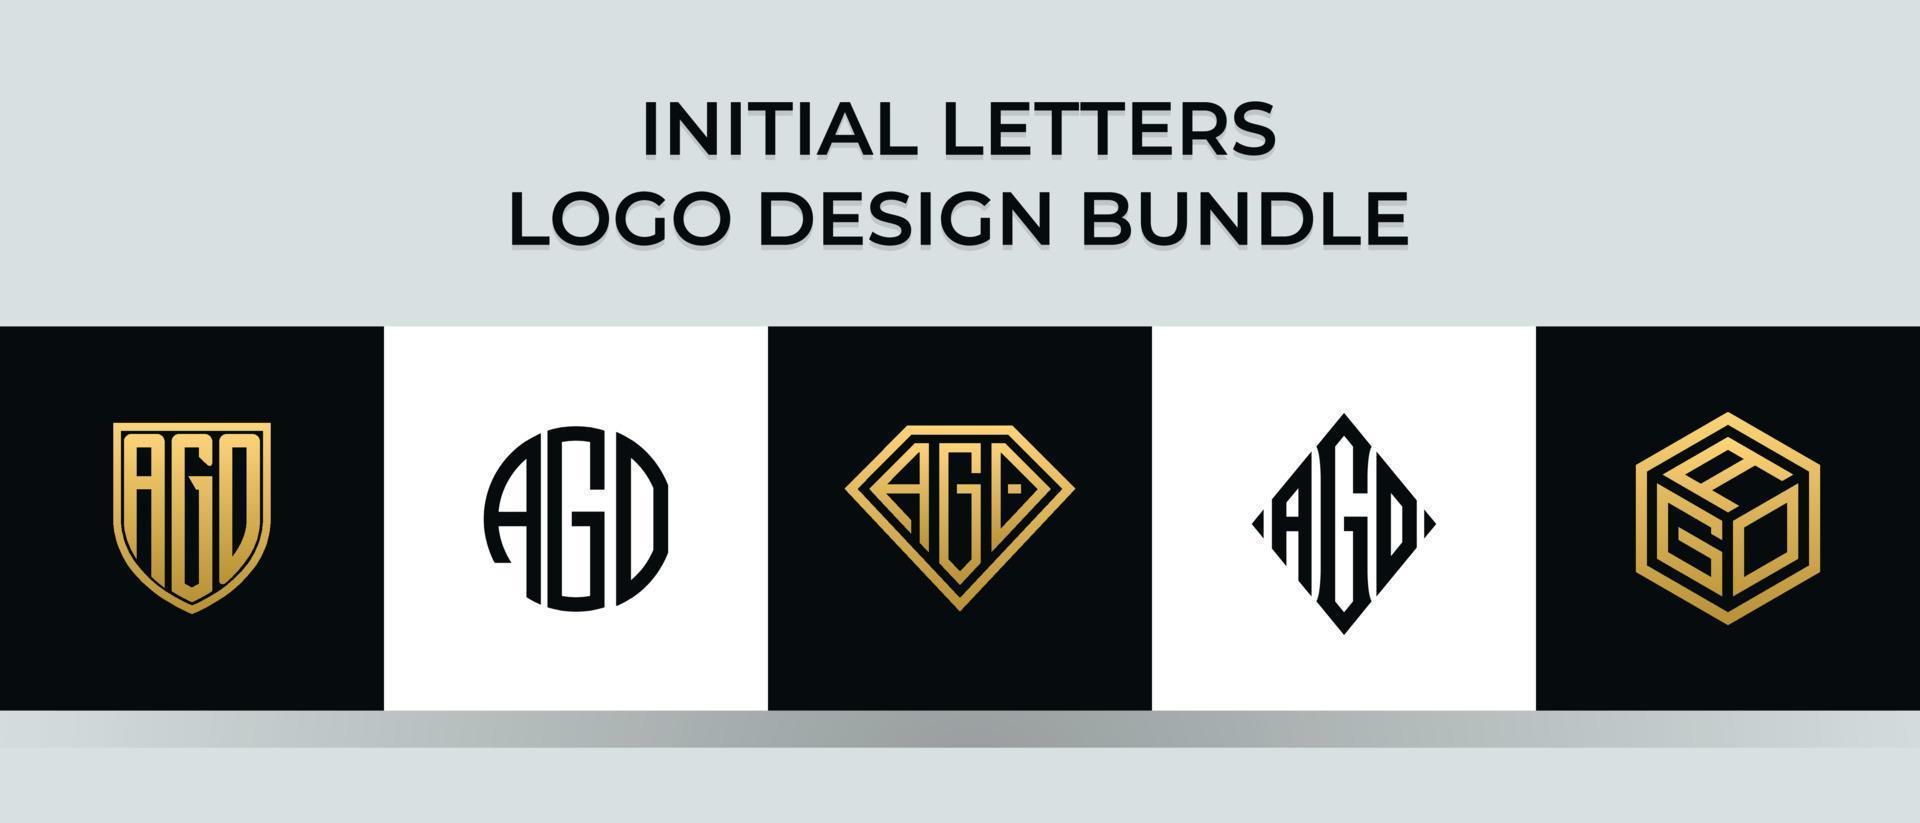 Initial letters AGO logo designs Bundle vector